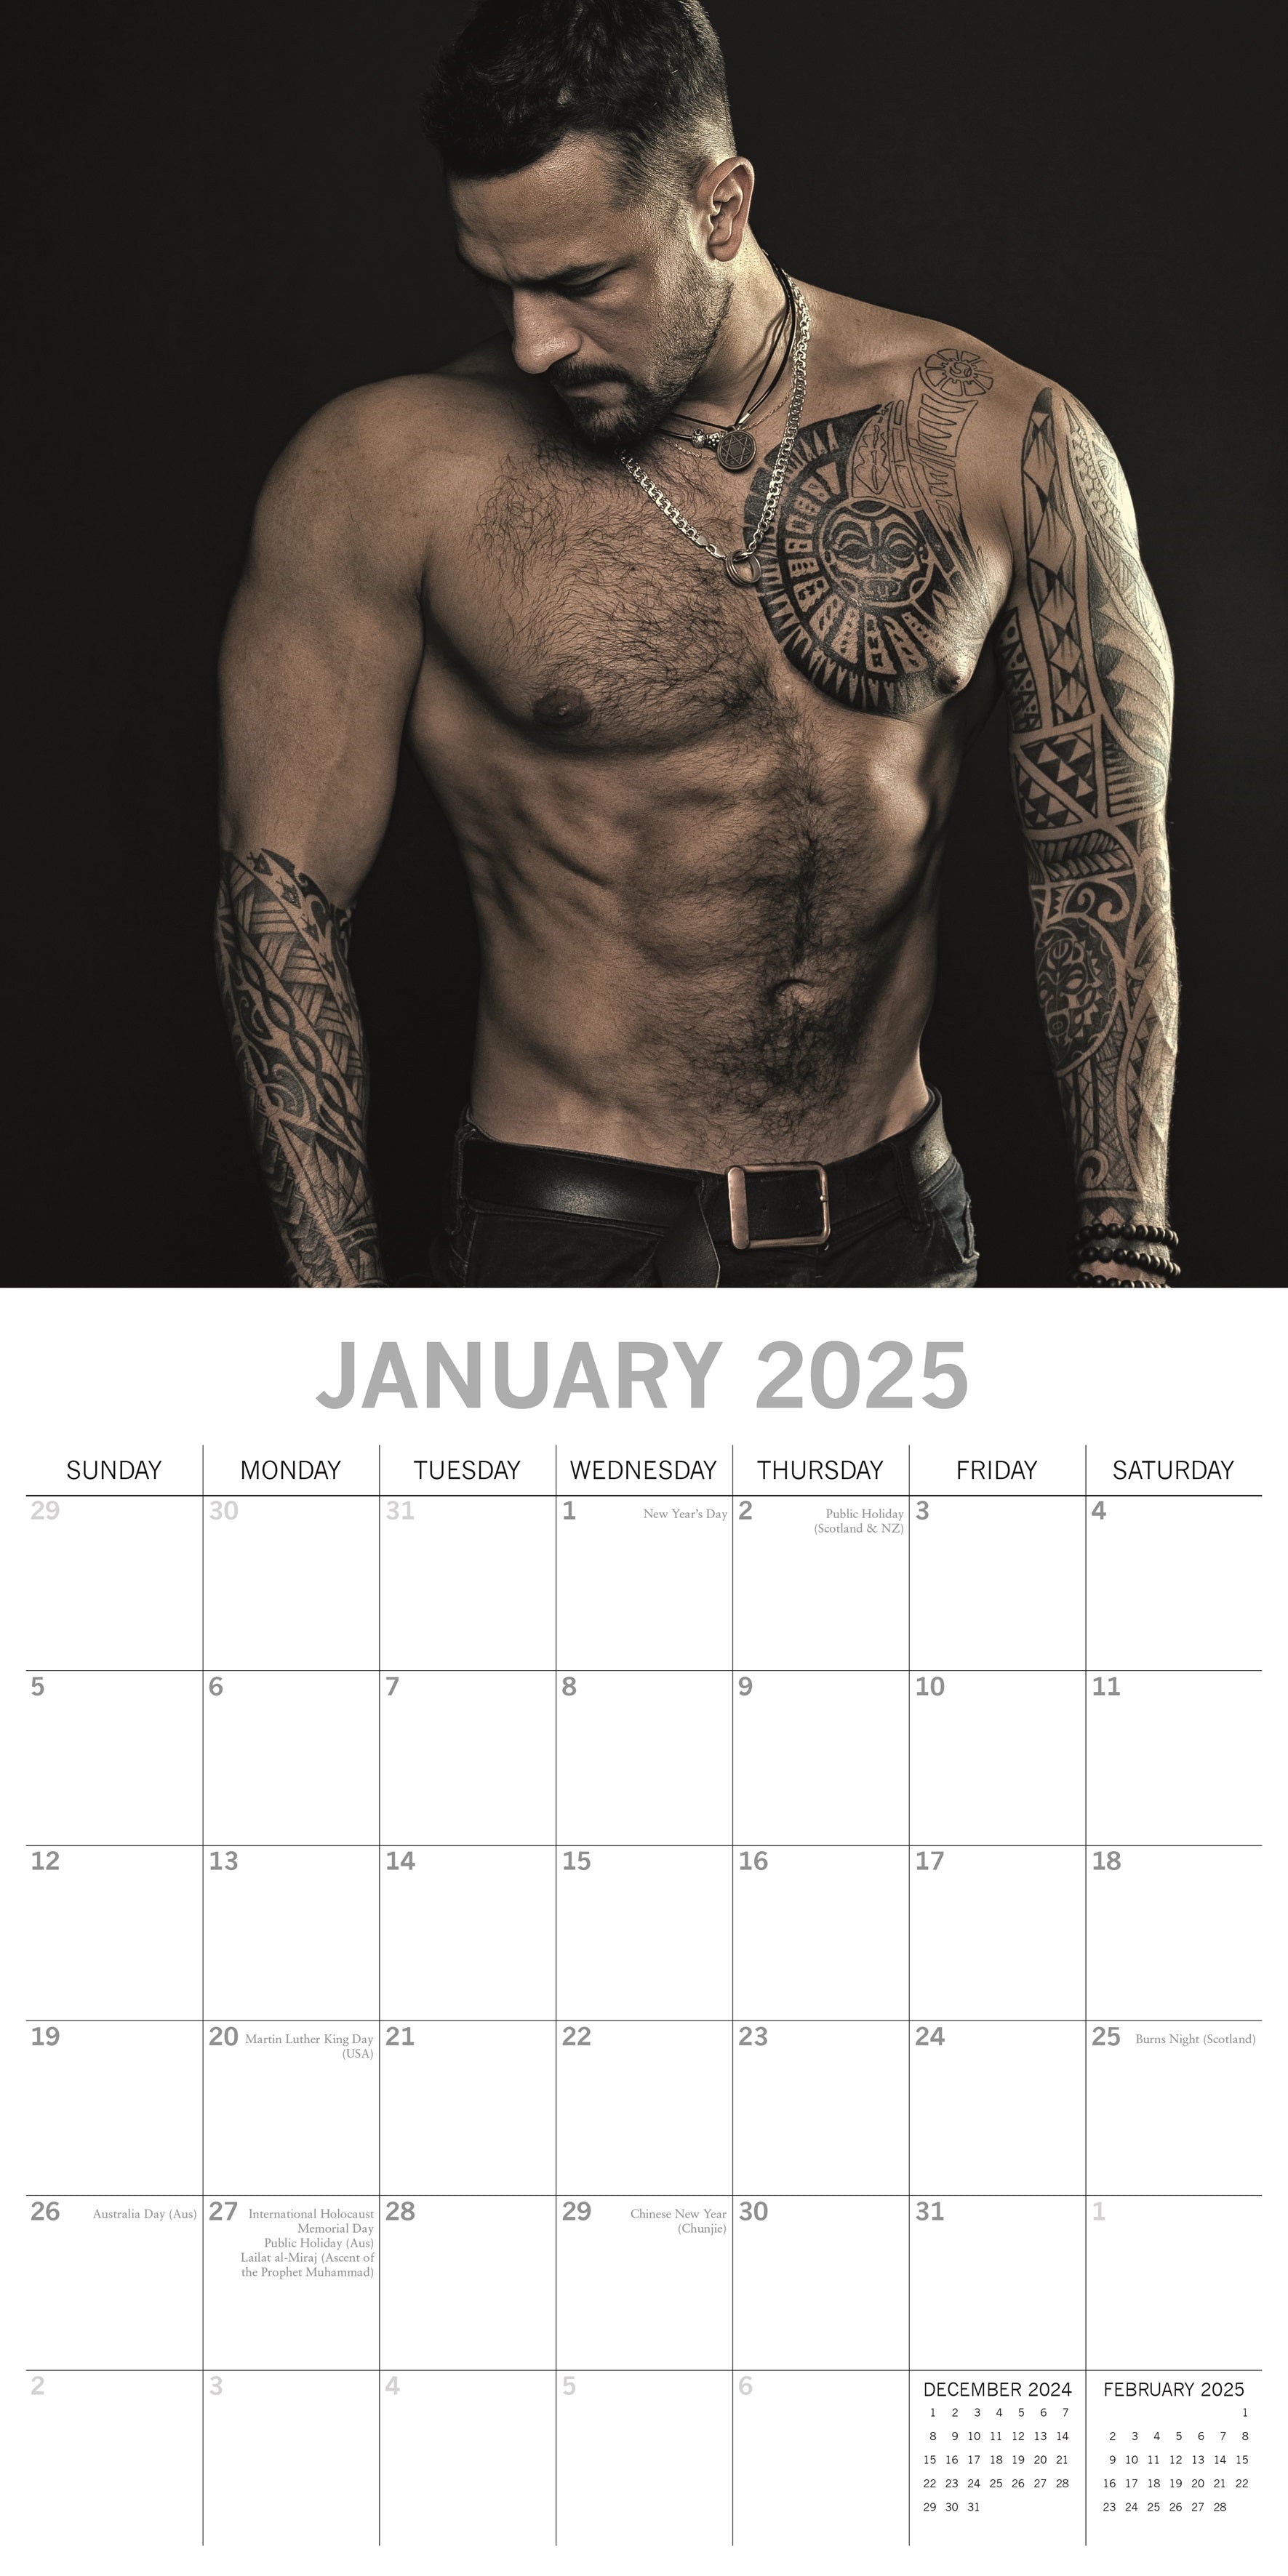 2025 Hot Shirtless Men - Square Wall Calendar